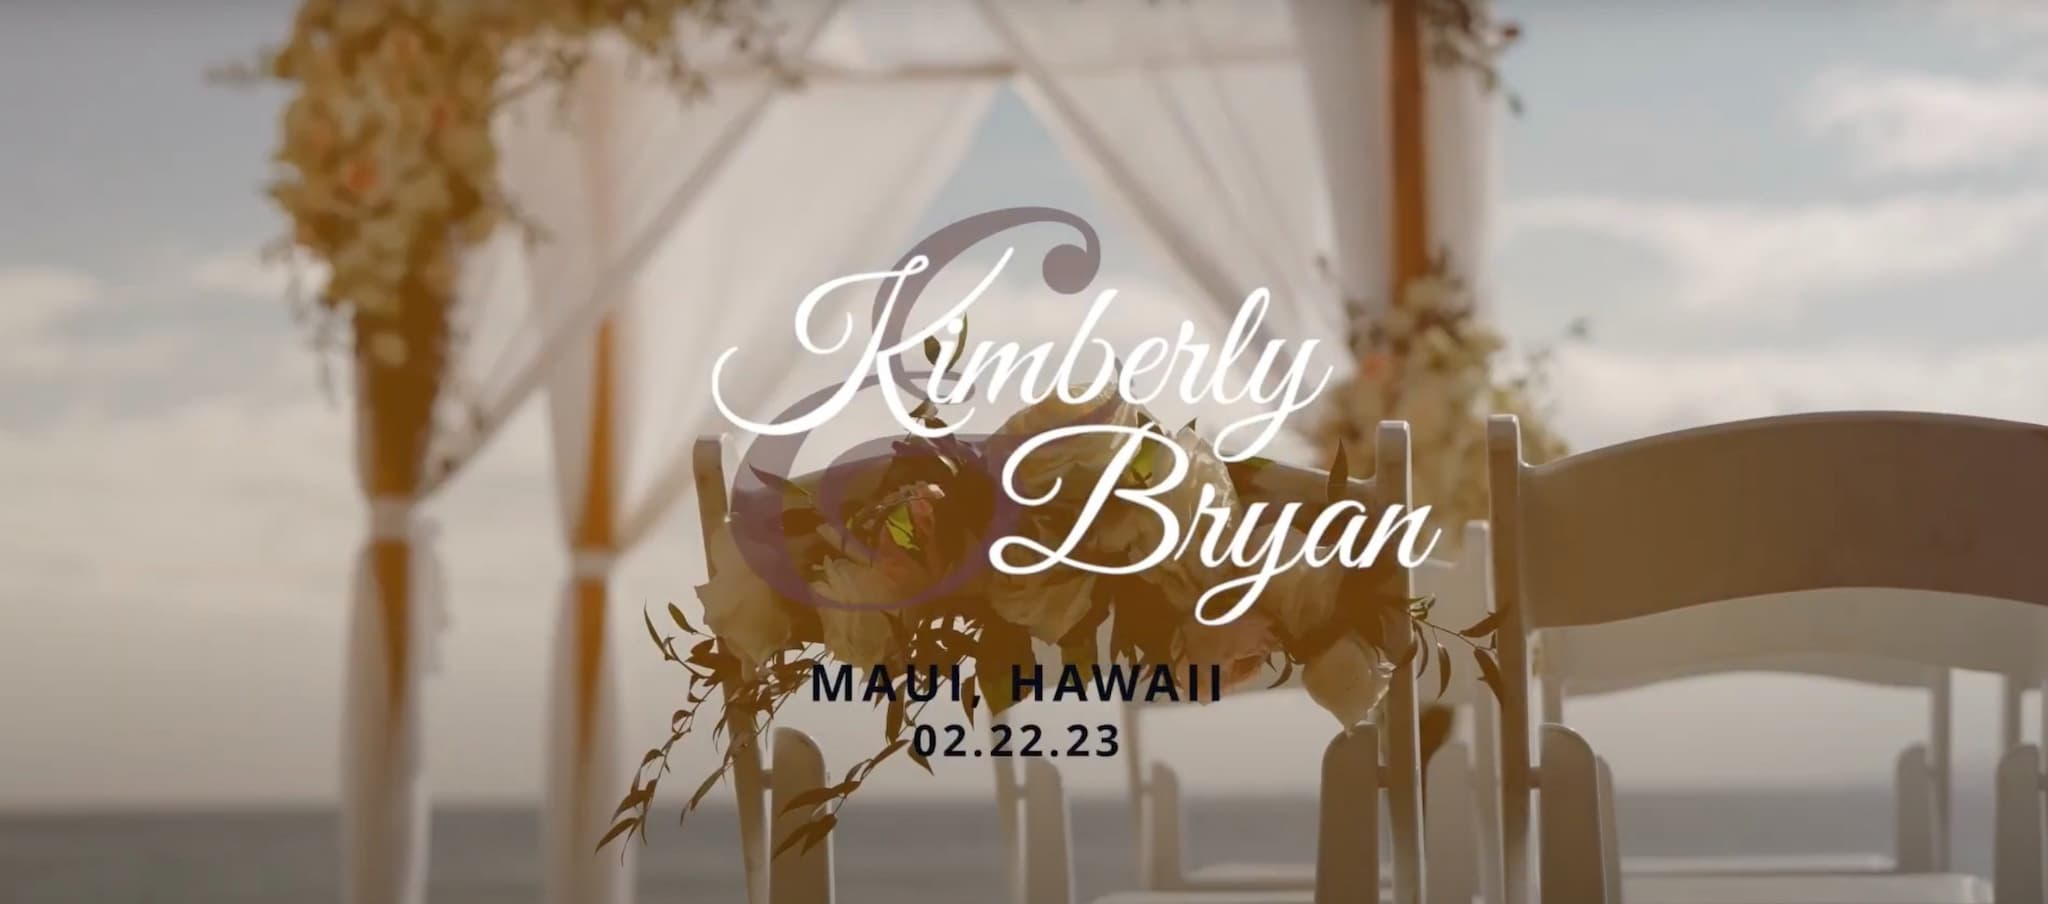 Capturing Love and Laughter: Bryan & Kim's Wedding at the Hyatt Lahaina